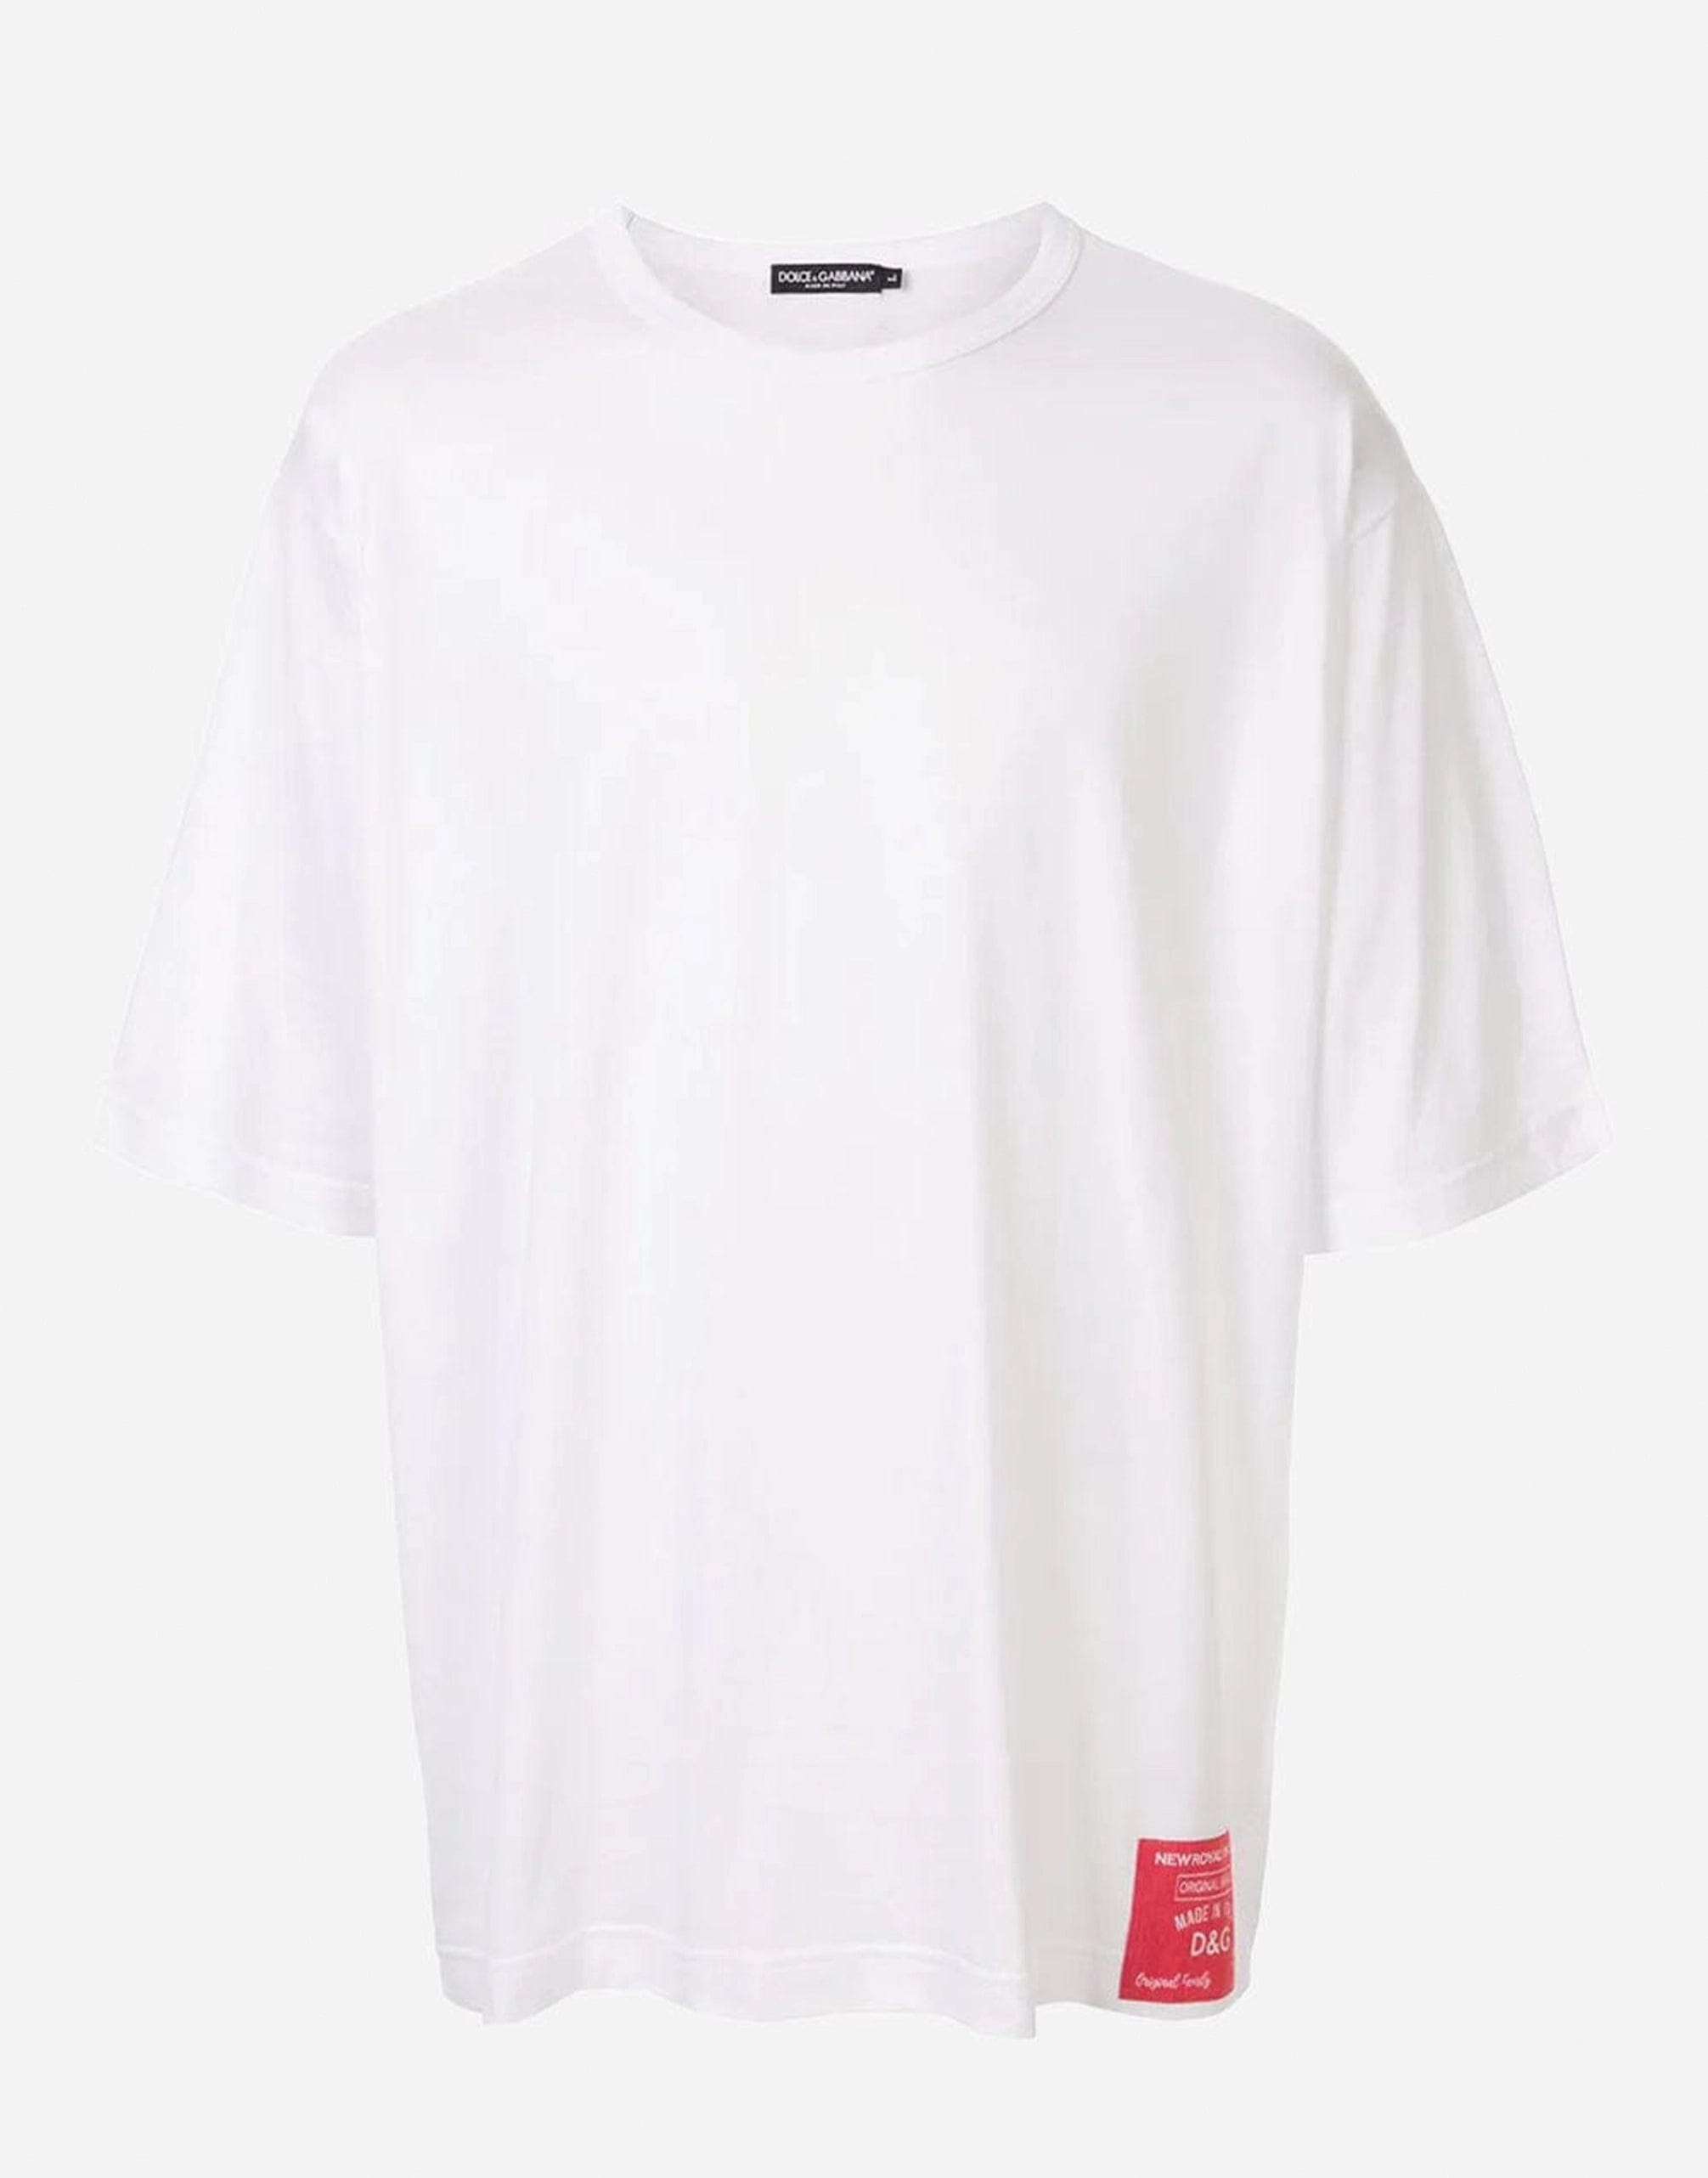 Dolce & Gabbana Original Label T-Shirt